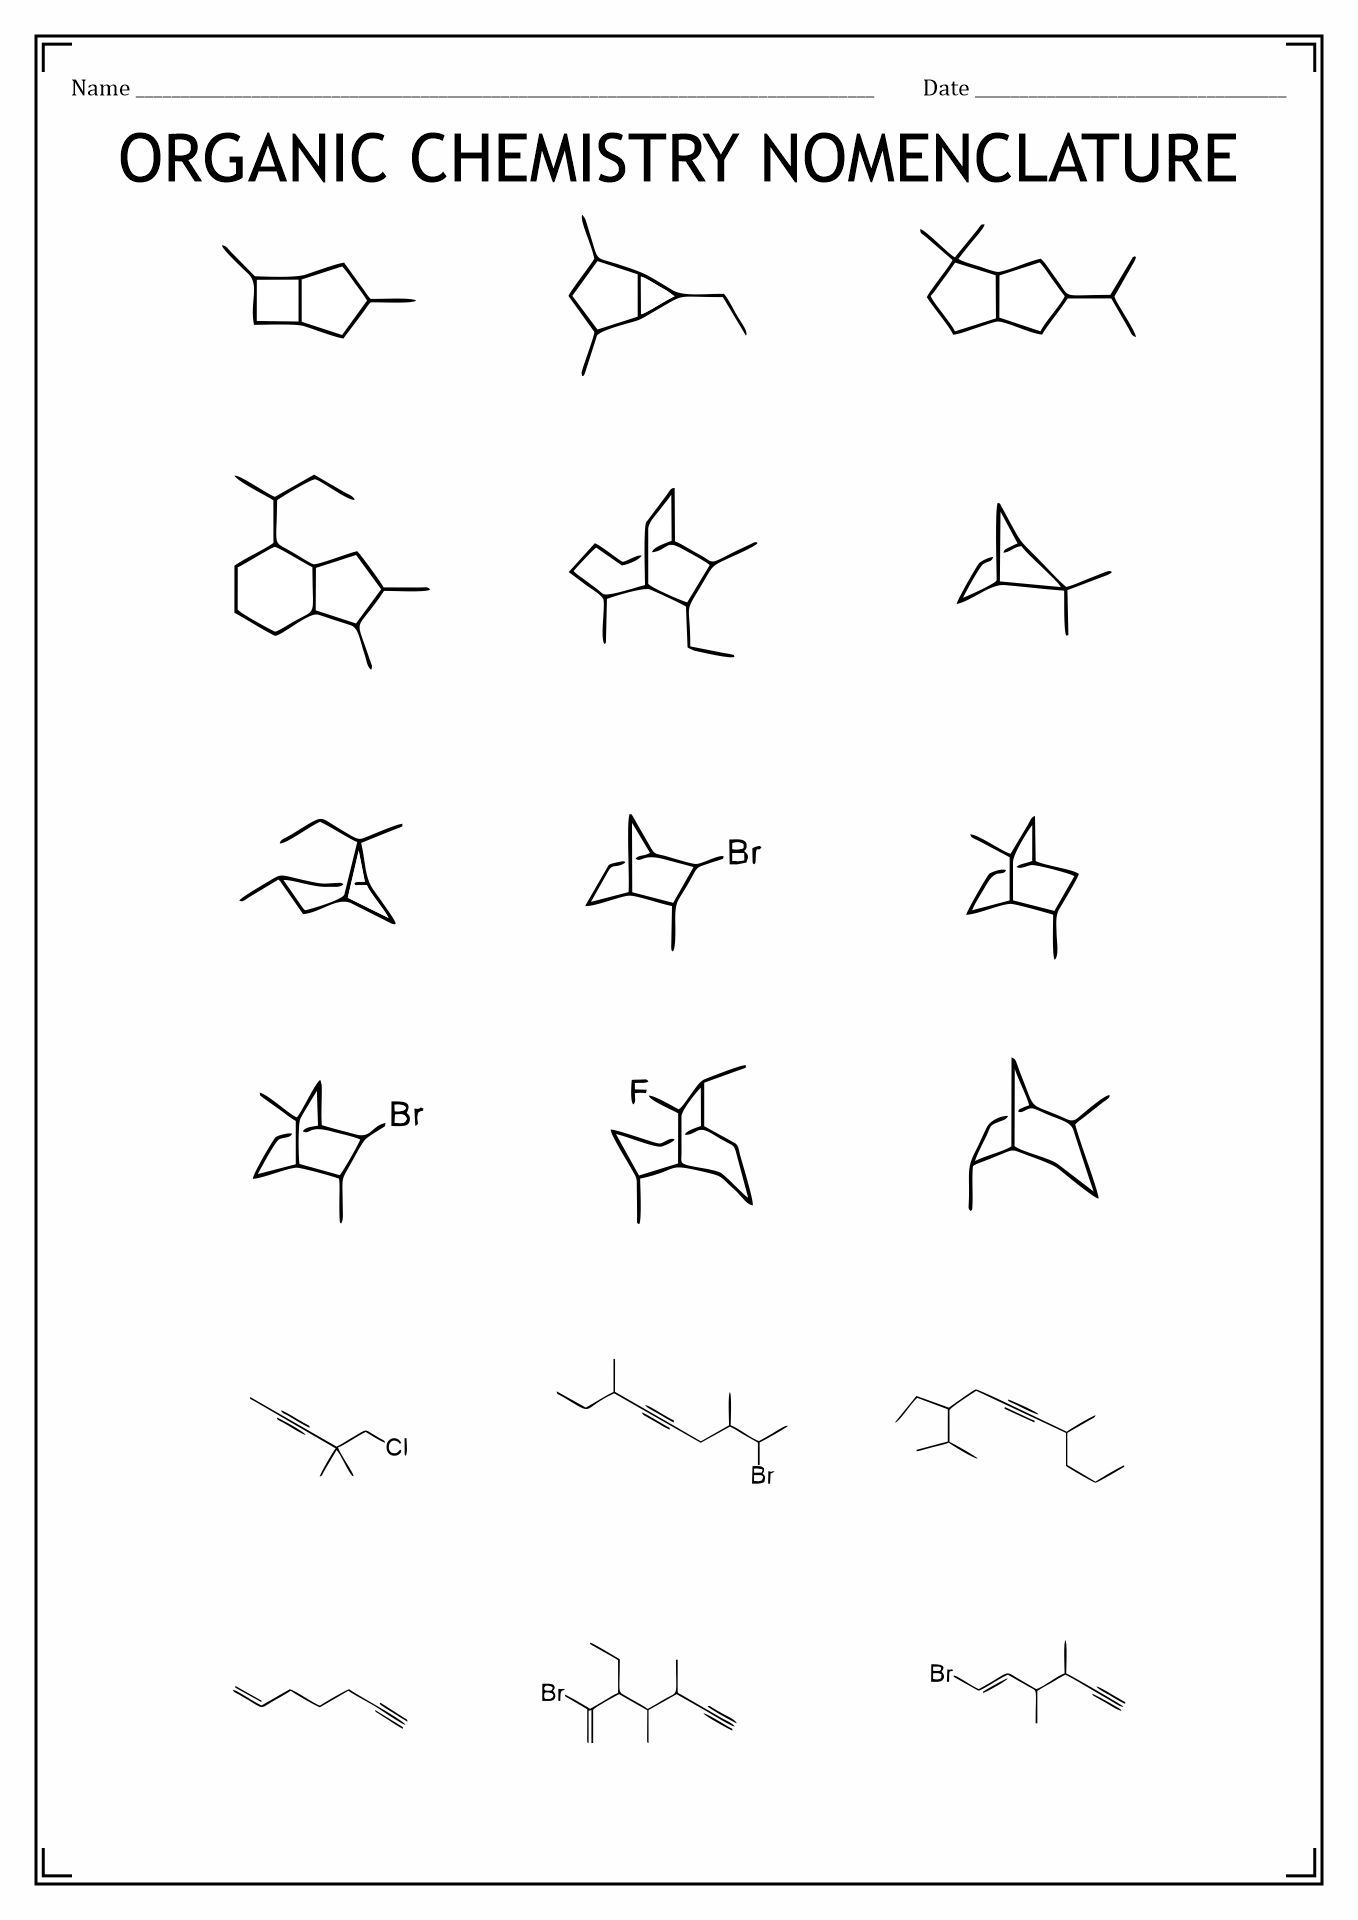 Organic Chemistry Nomenclature Practice Image